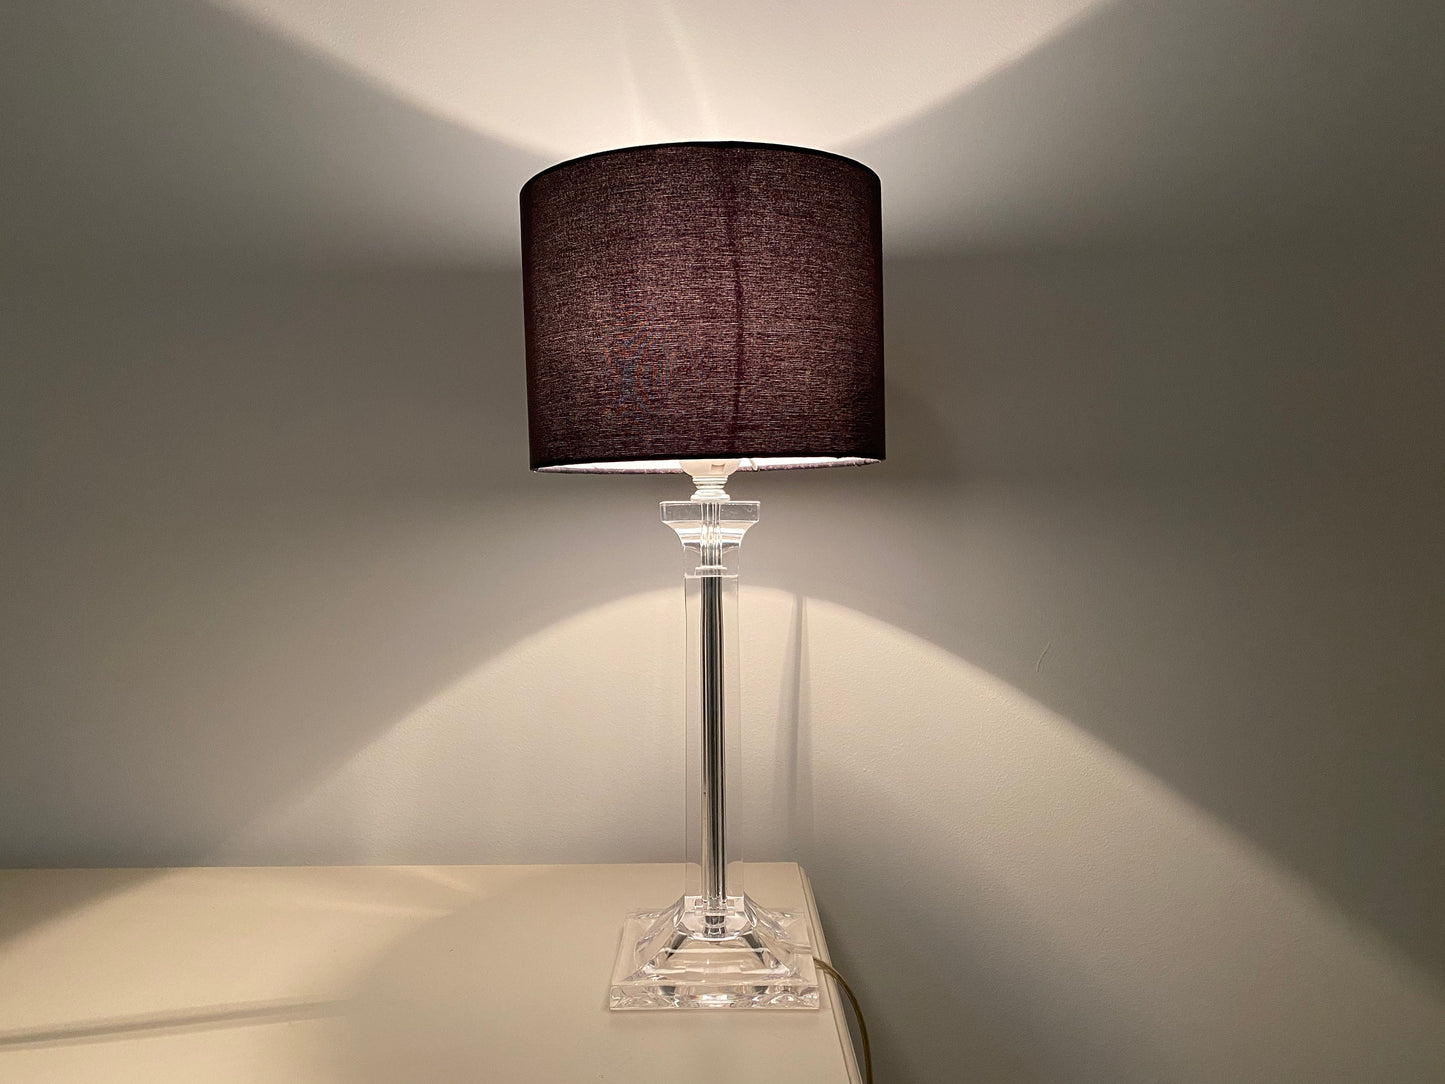 1970s Vintage Plexiglas Light | Mid Century Modern Light With Black Lampshade | Transparent Plexi glass Retro Table Light / Table Lamp